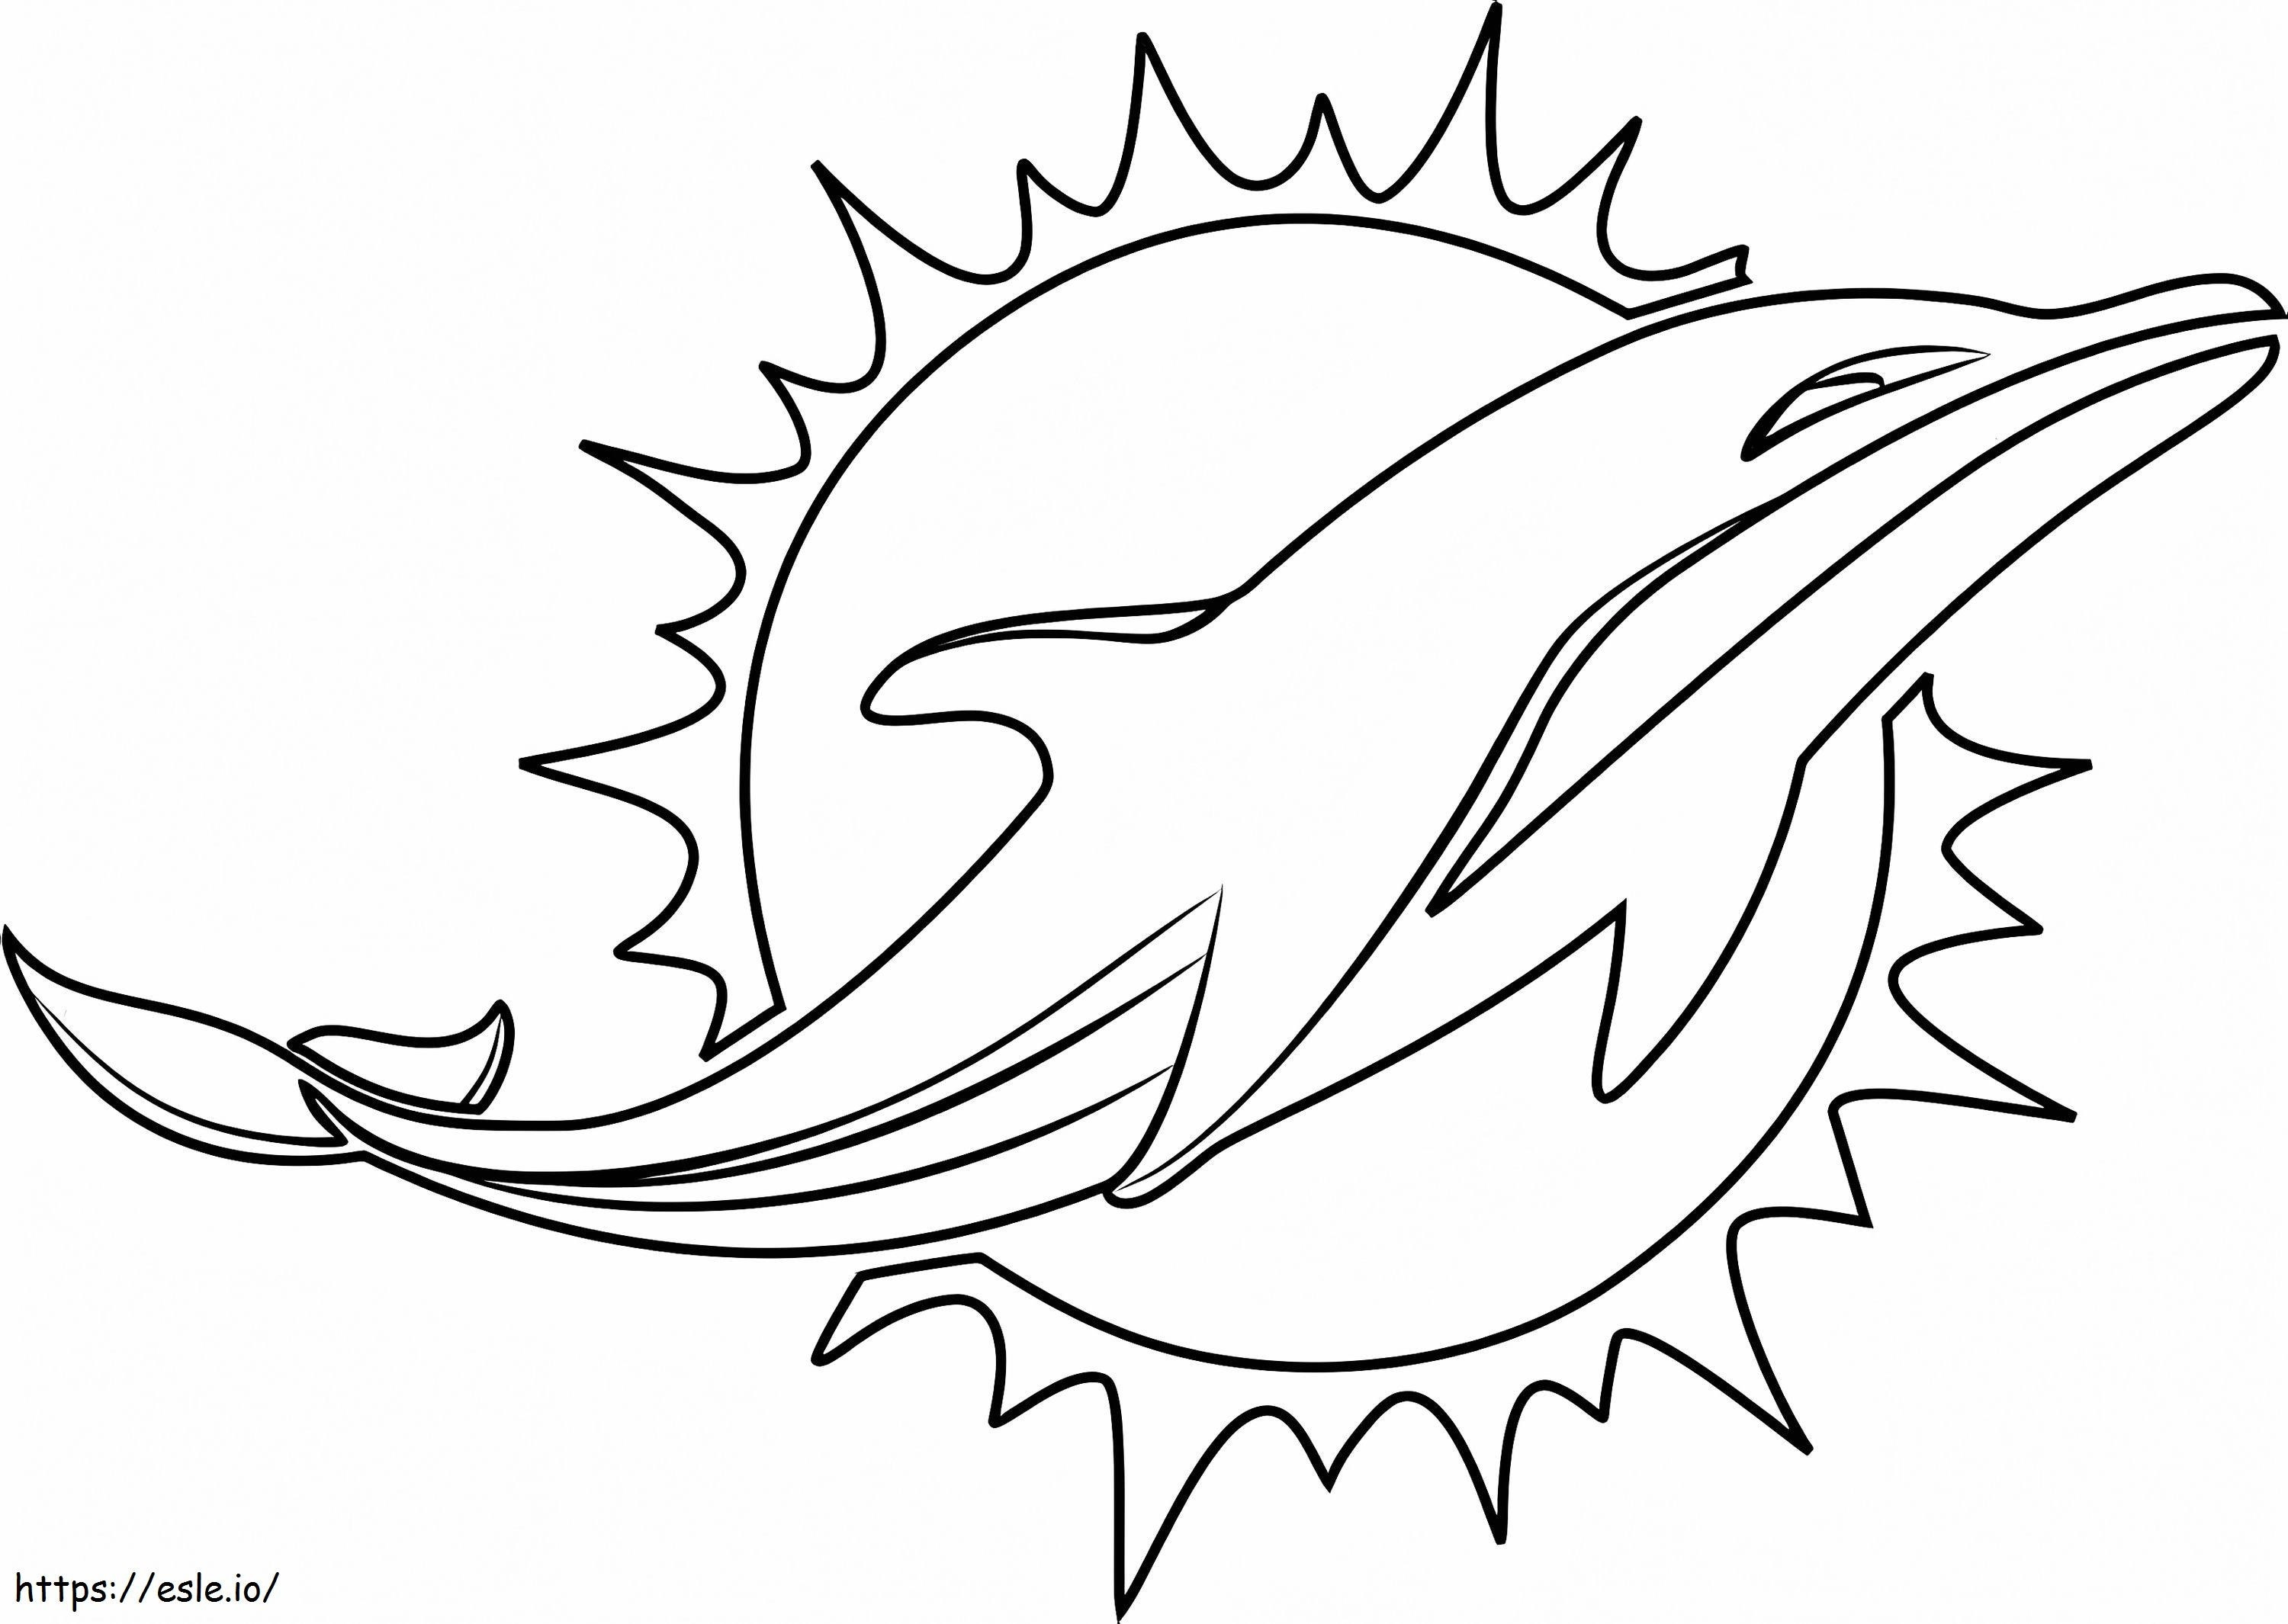 Miami Dolphins-logo kleurplaat kleurplaat